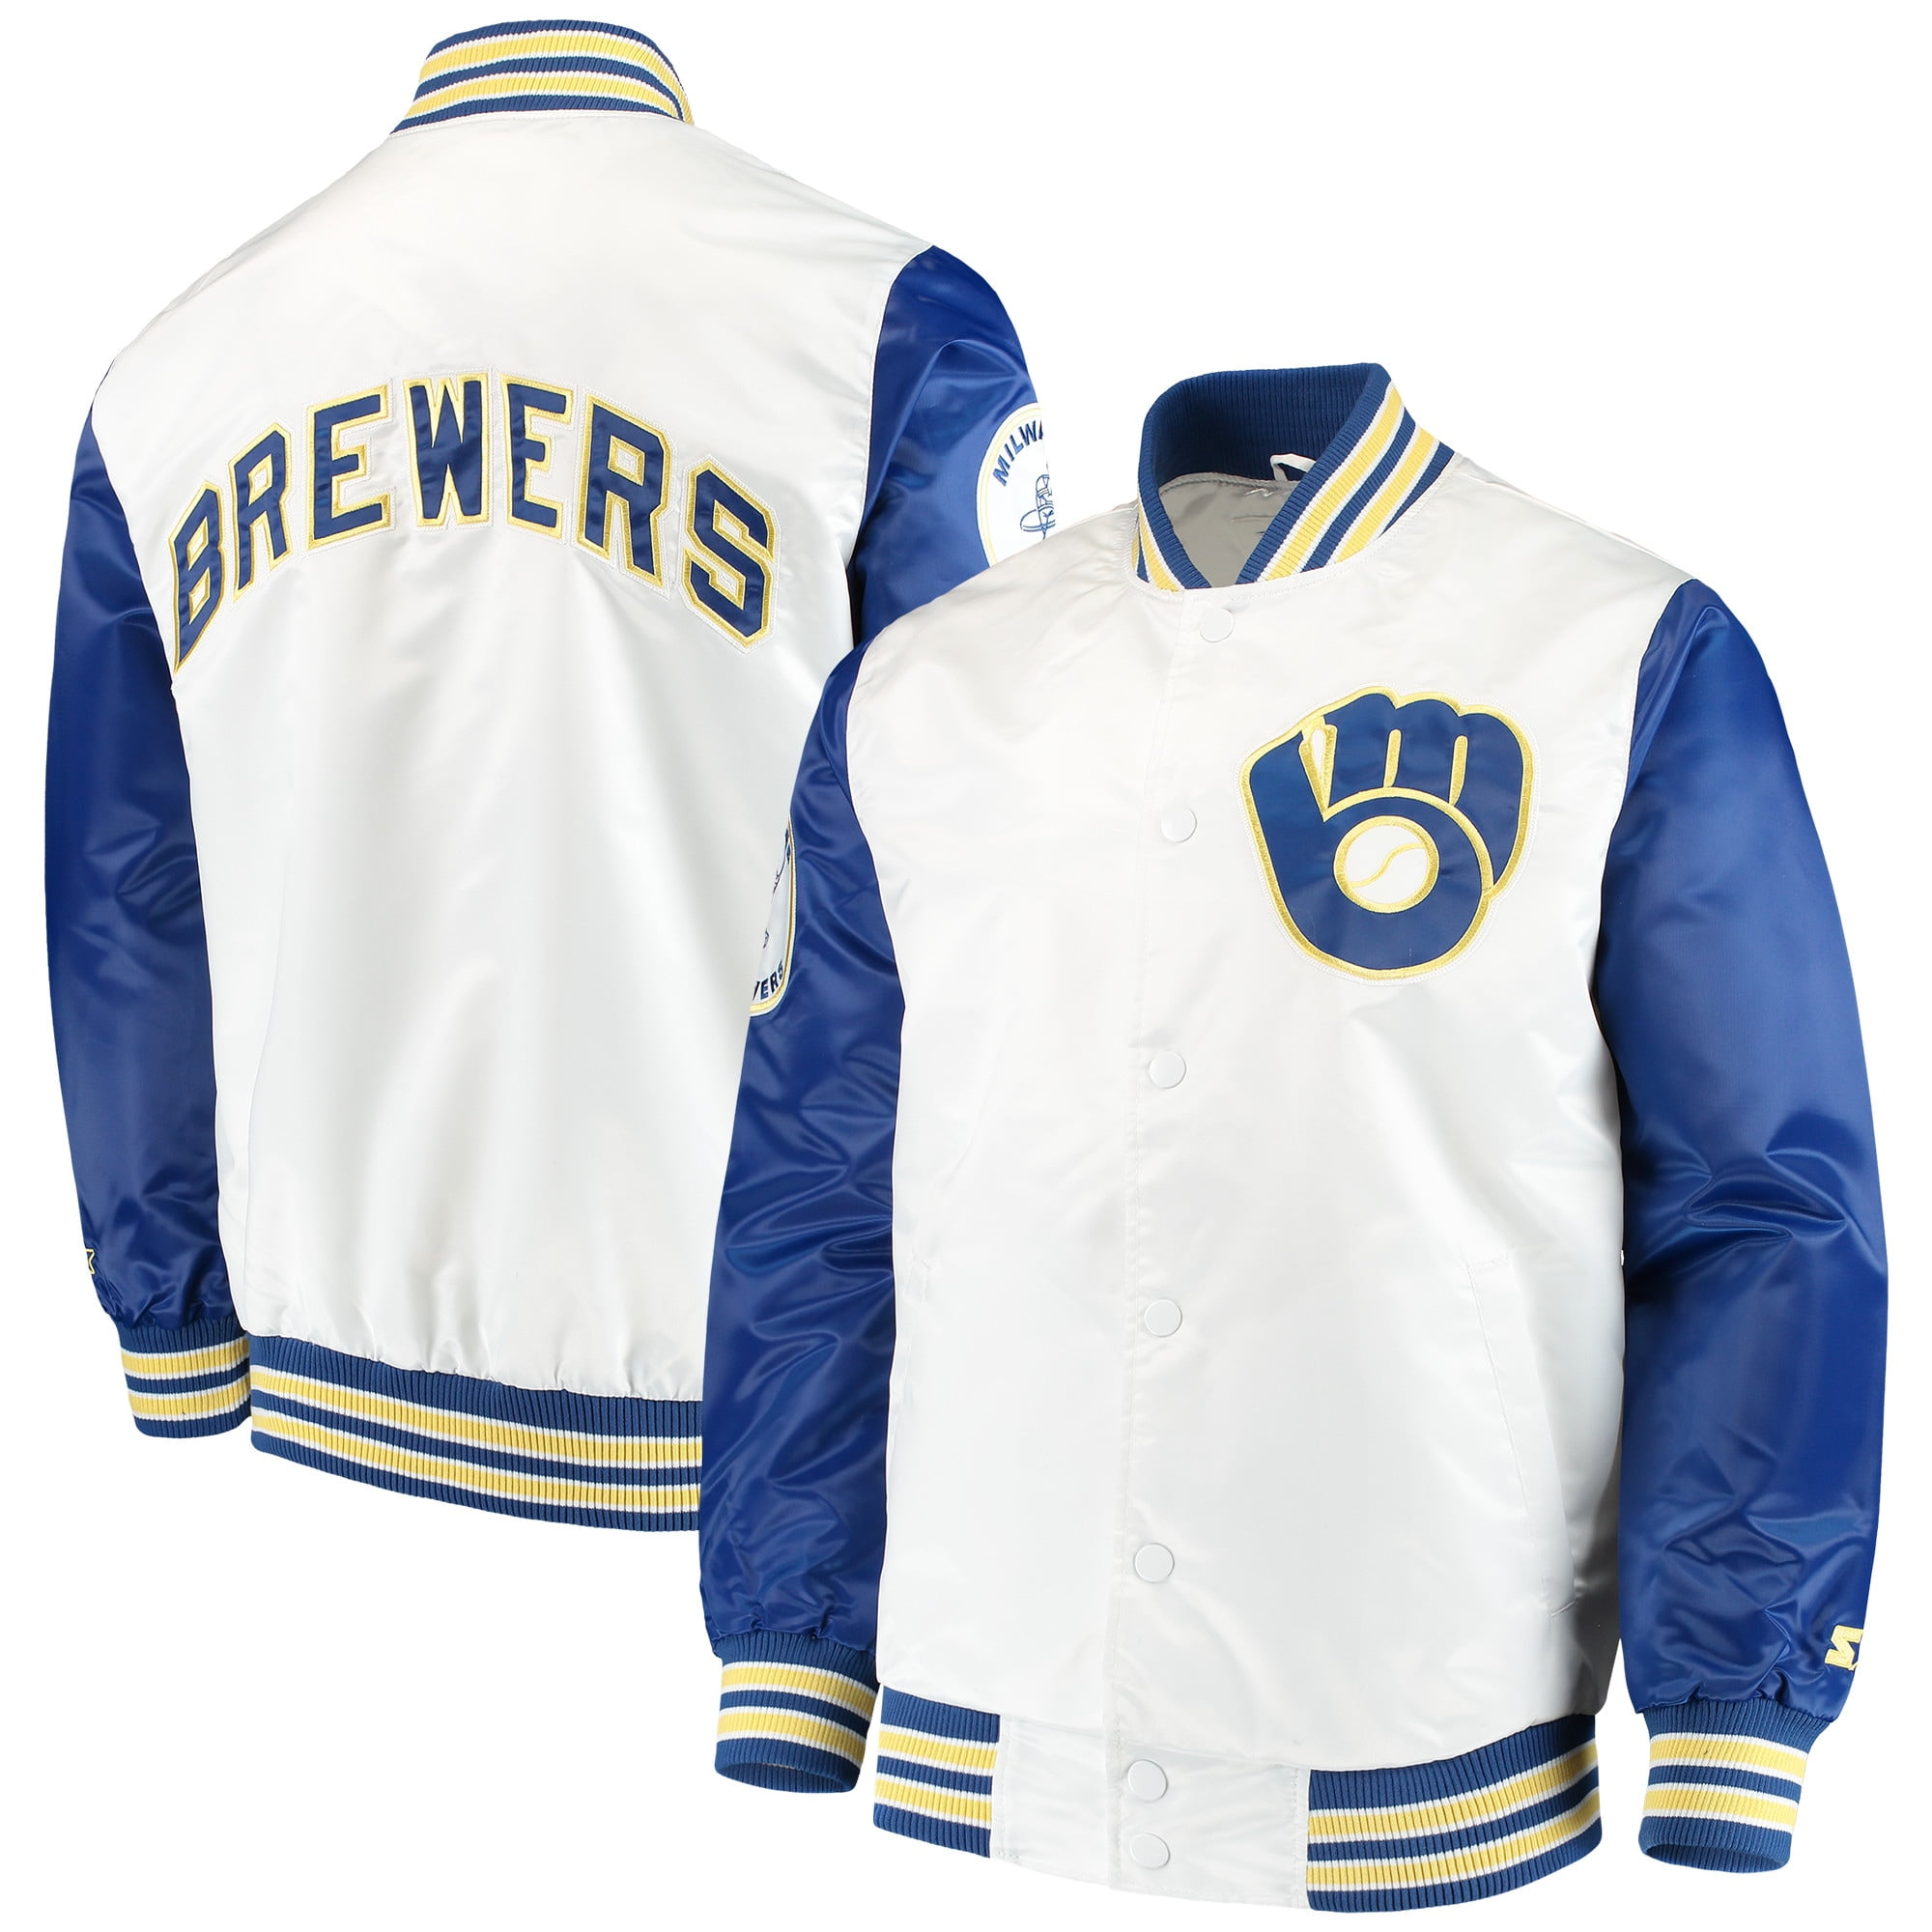 Milwaukee Brewers Starter The Legend Jacket - White - Walmart.com ...